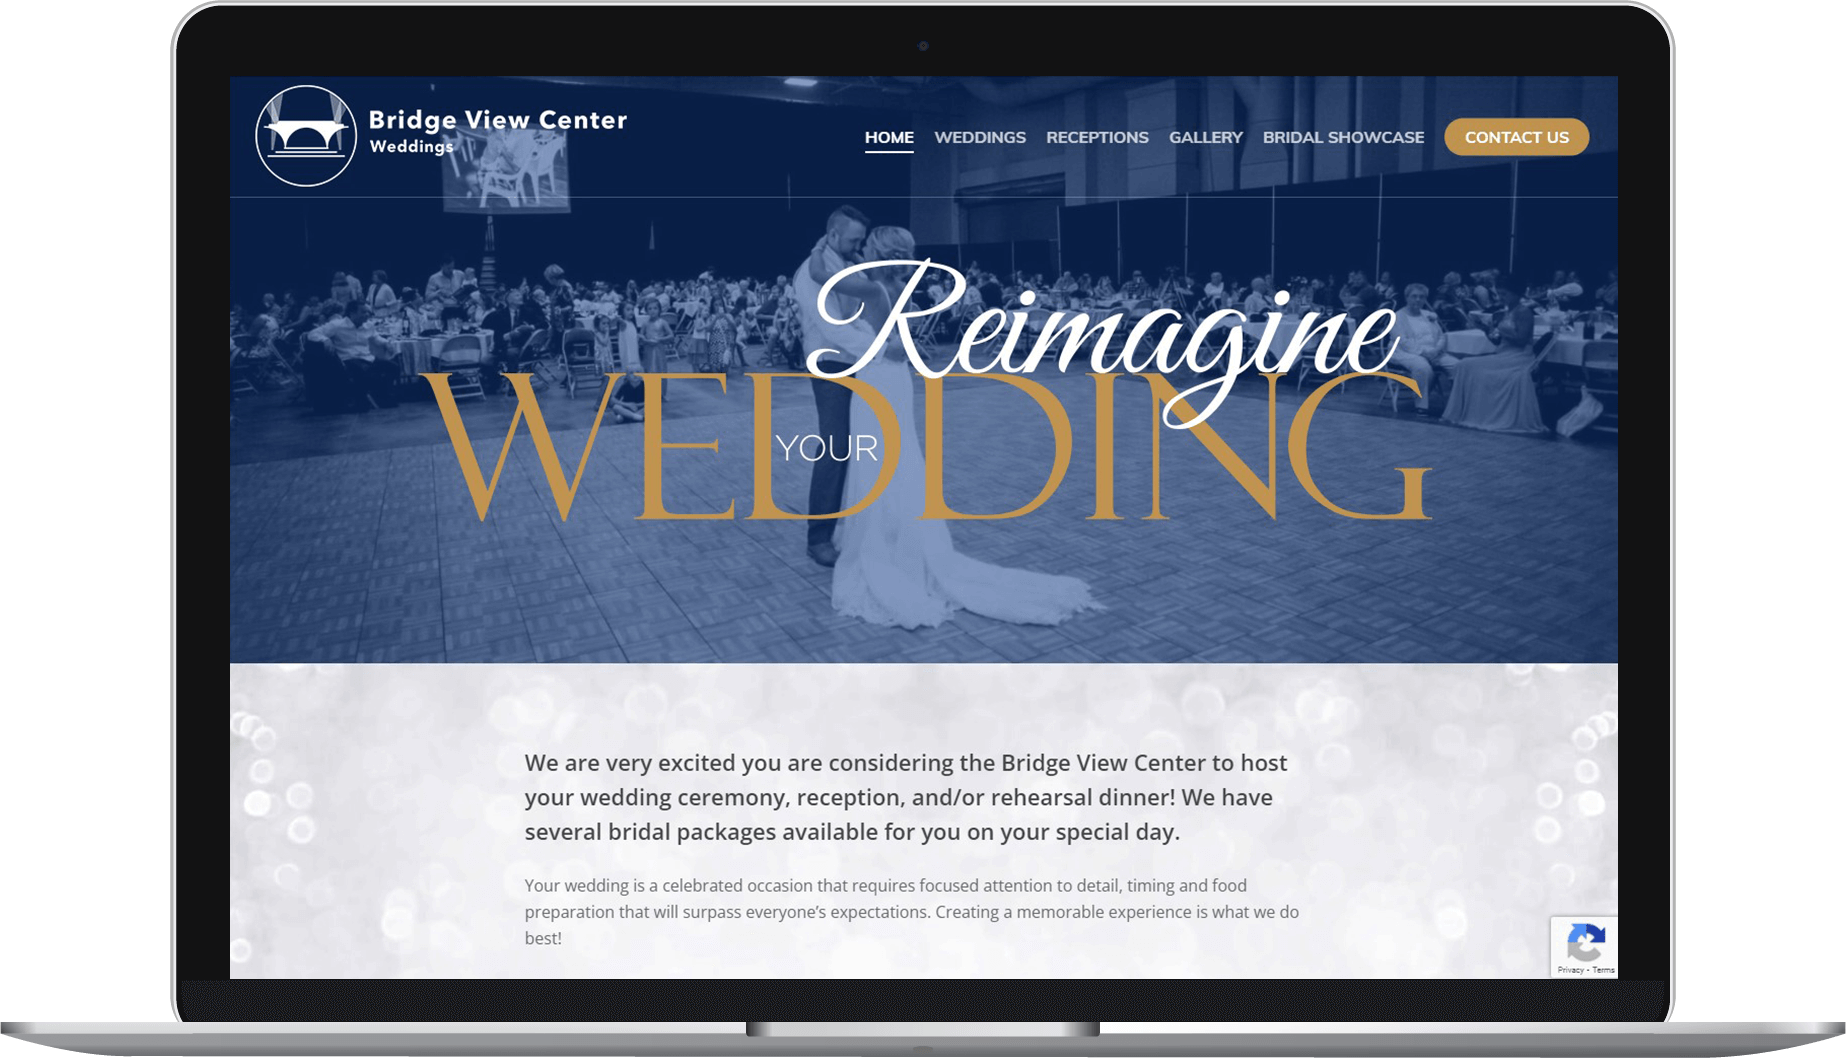 Ottumwa Weddings website homepage on a laptop computer.